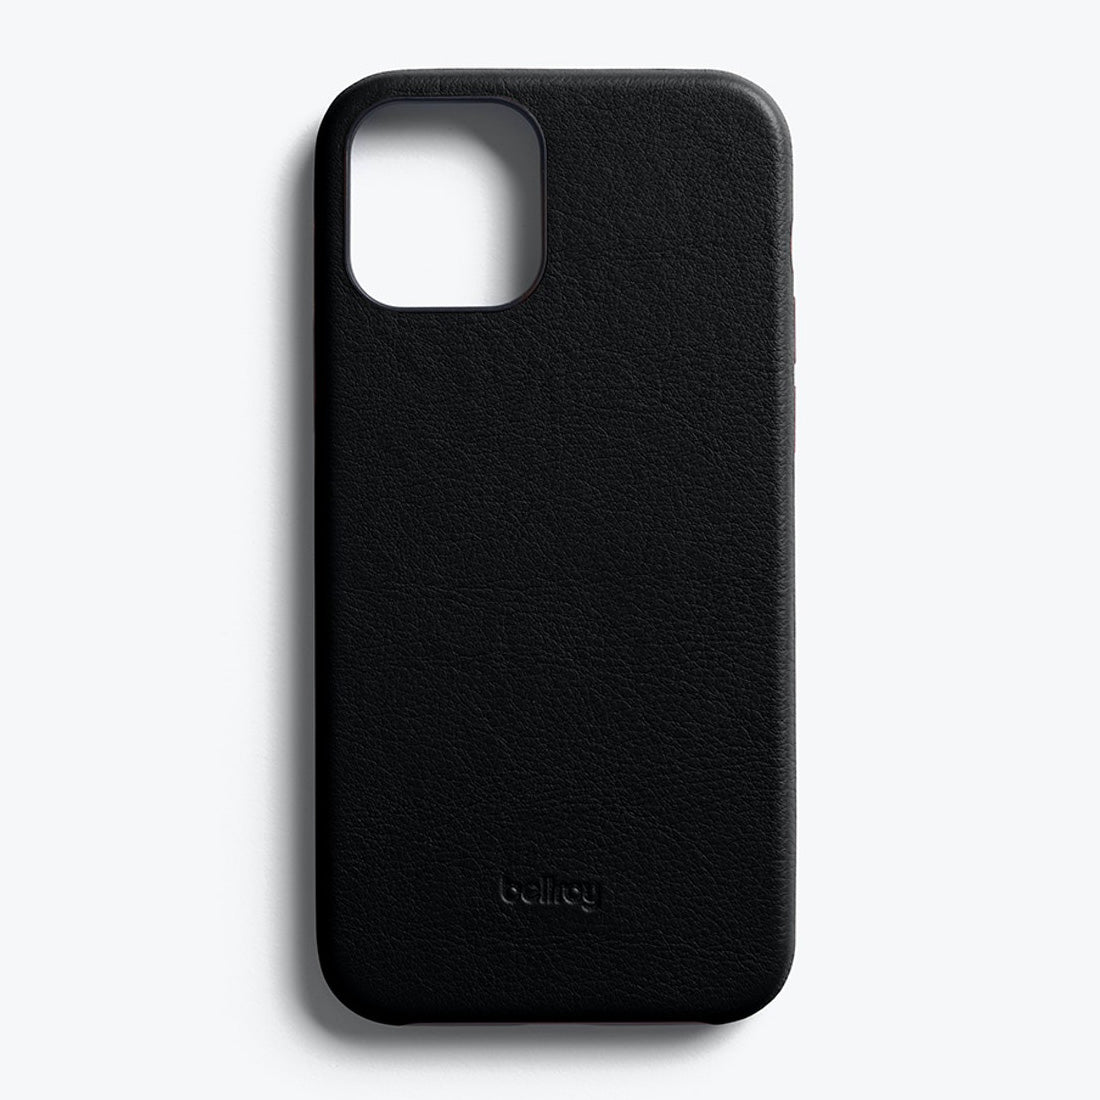 Bellroy Slim Genuine Leather Case For iPhone iPhone 12 Pro Max - BLACK - Mac Addict